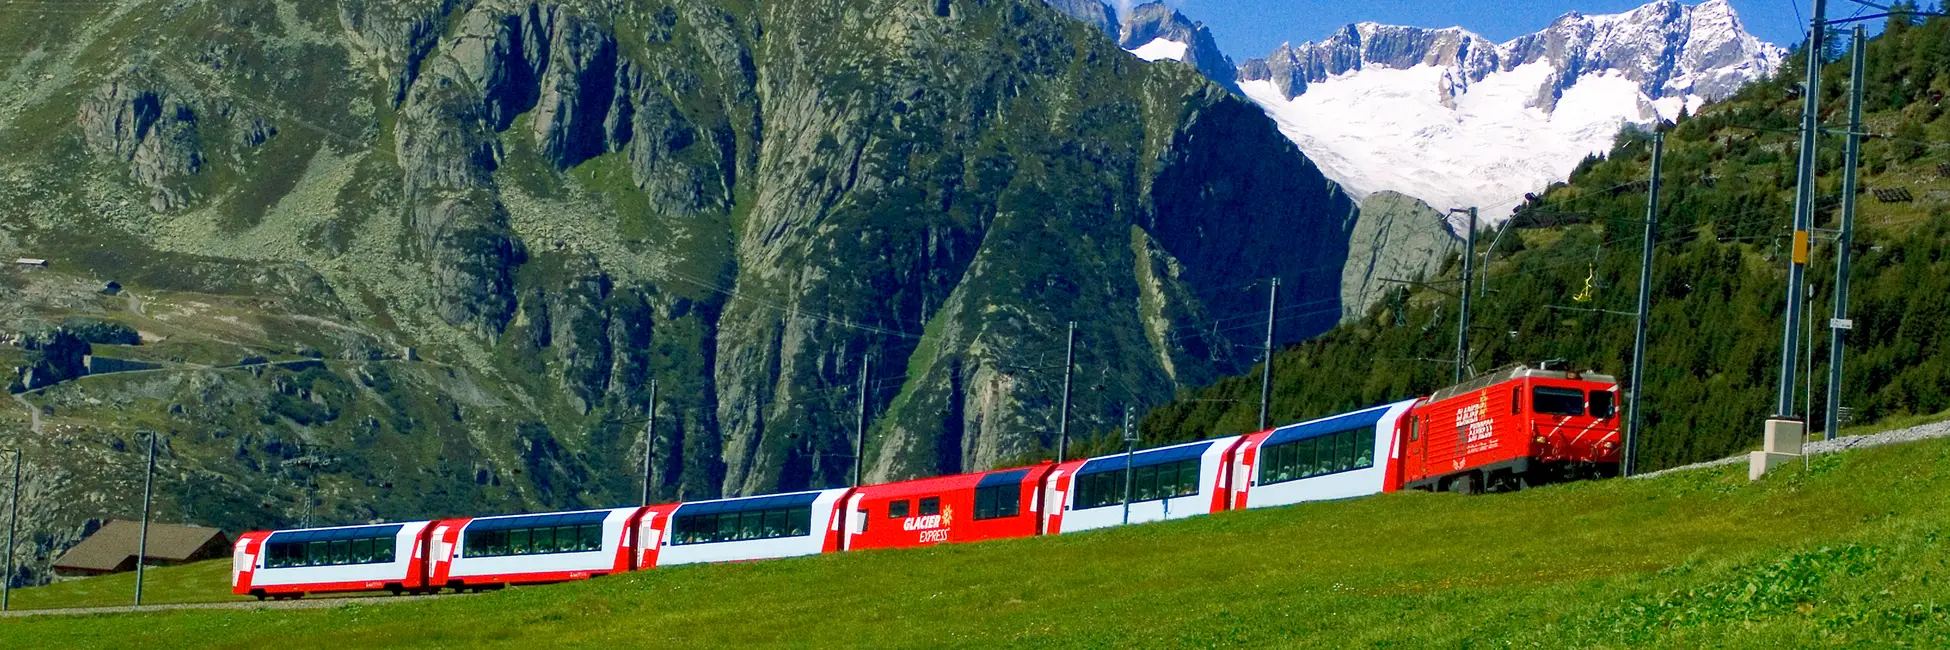 Alpen express en Suisse 